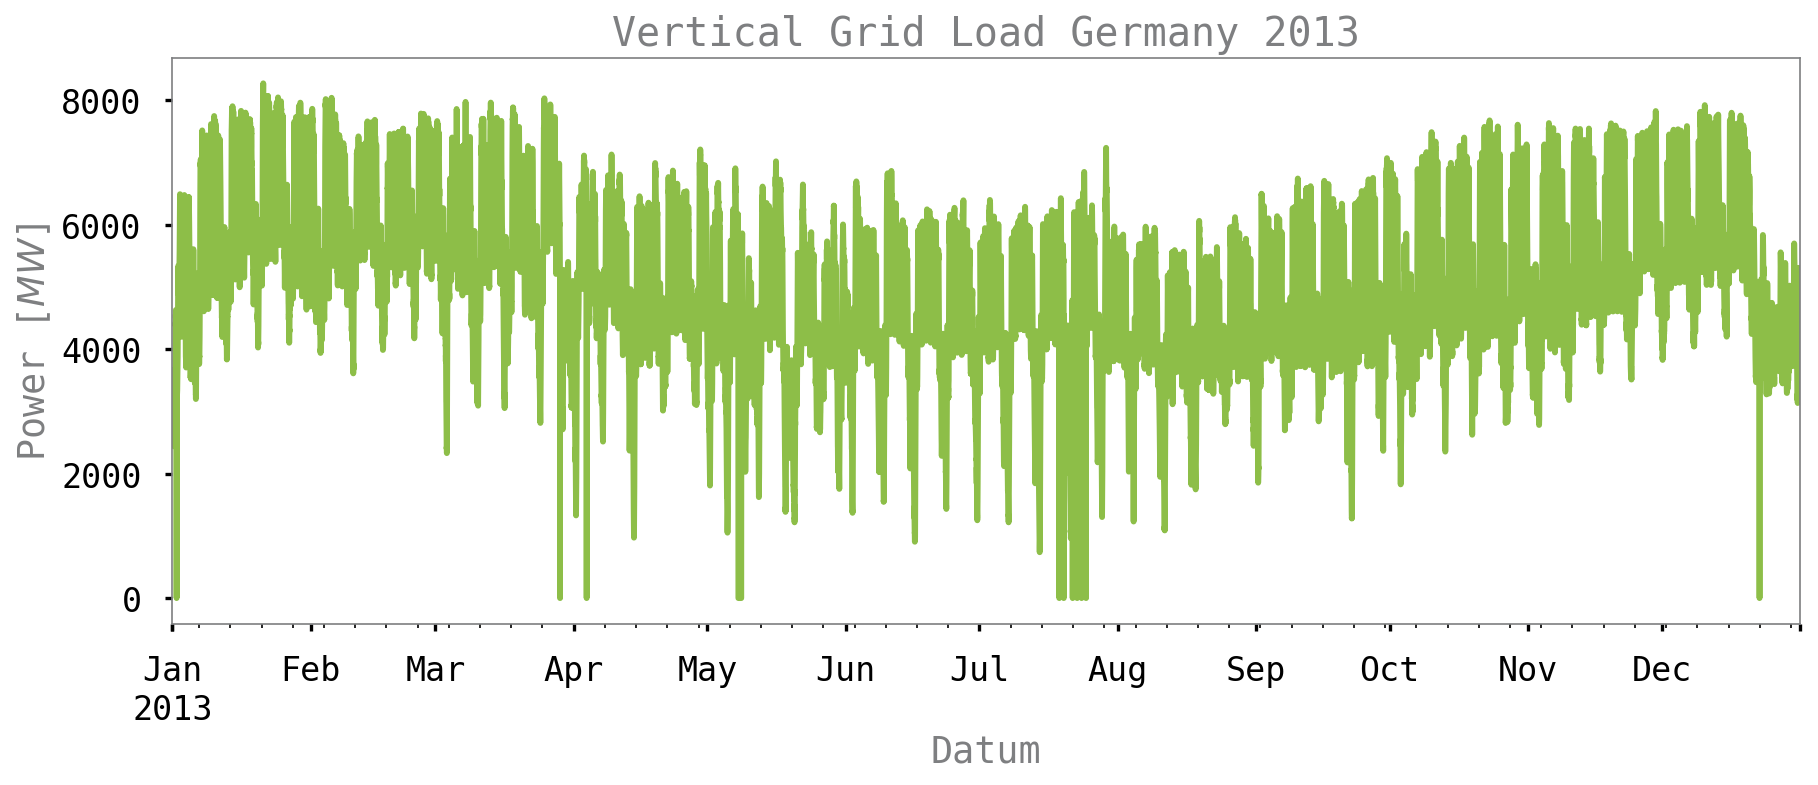 Vertical Netload Germany 2013